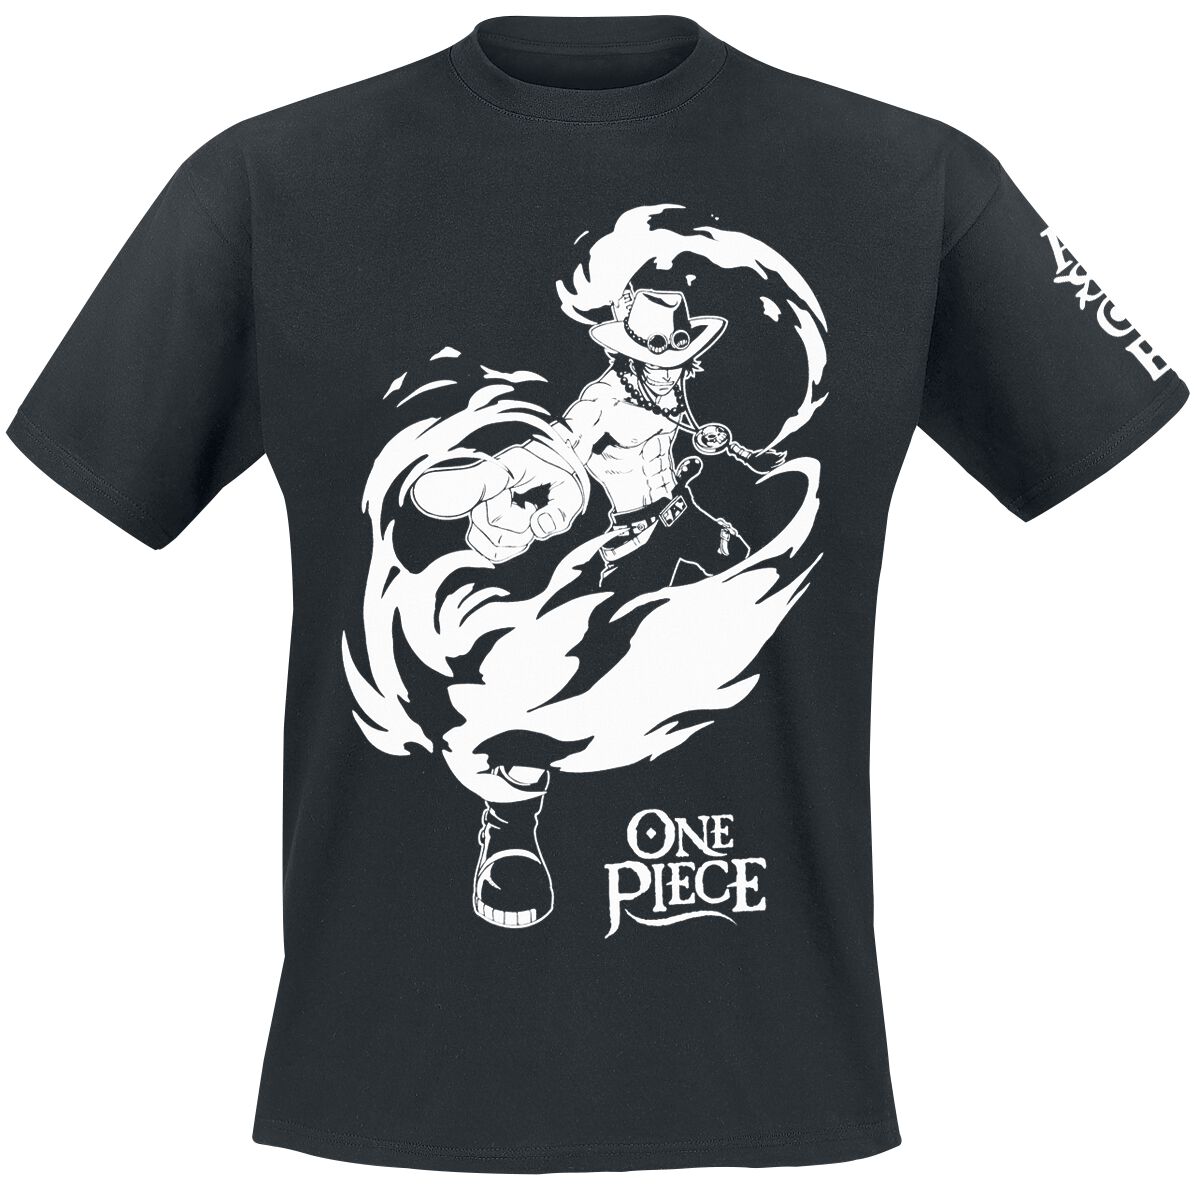 One Piece Ace T-Shirt black